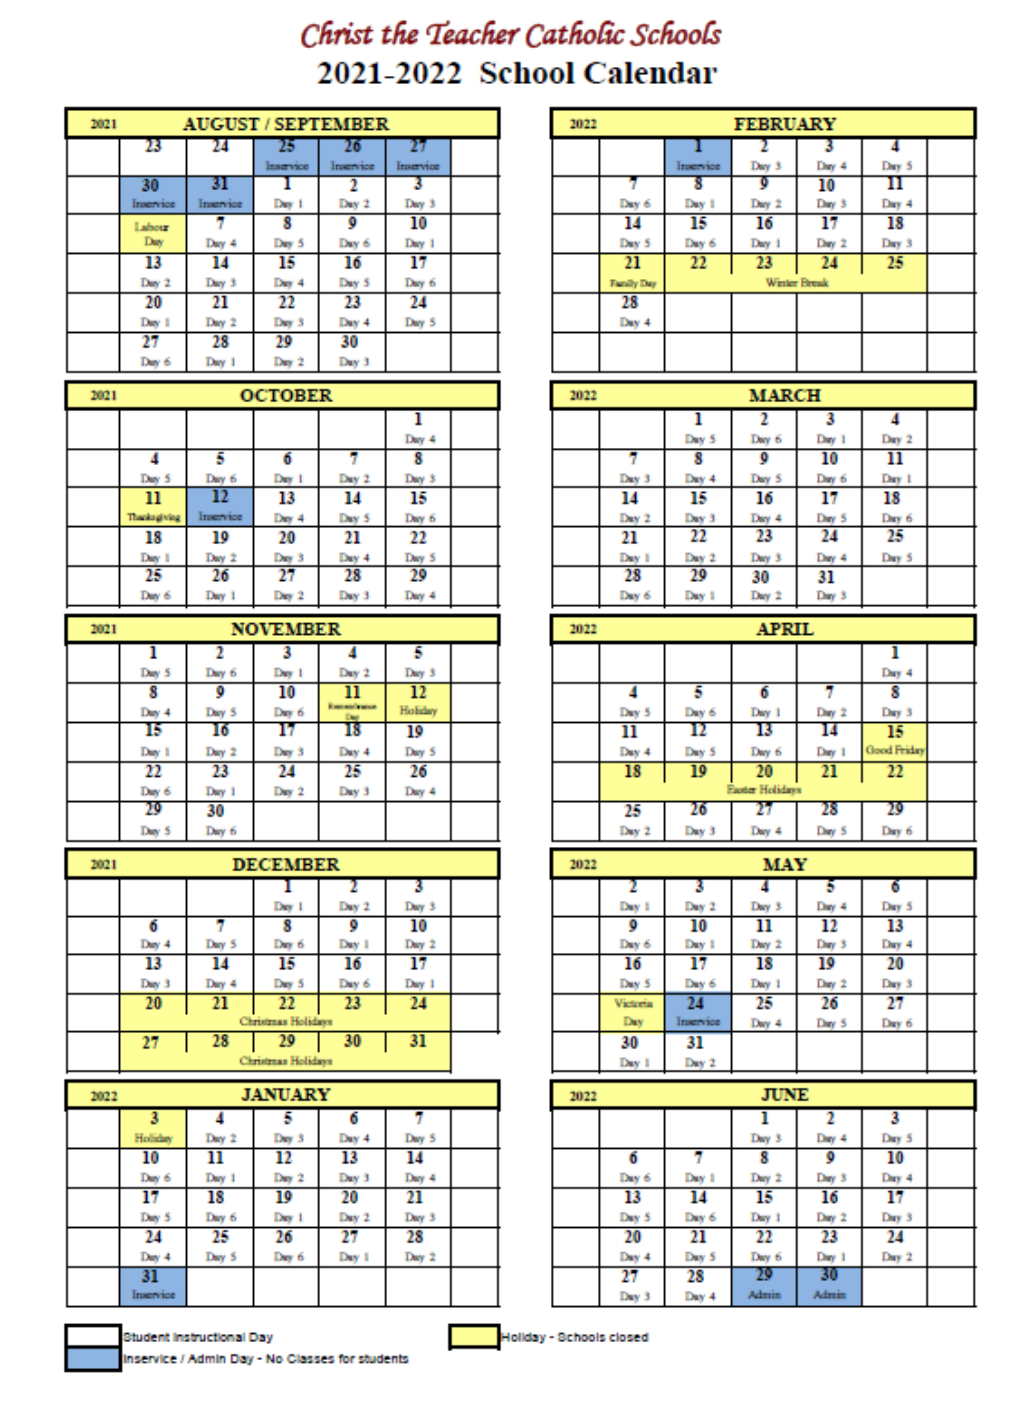 Spring Break 2022 Calendar 2021-2022 School Calendar – Christ The Teacher Catholic Schools